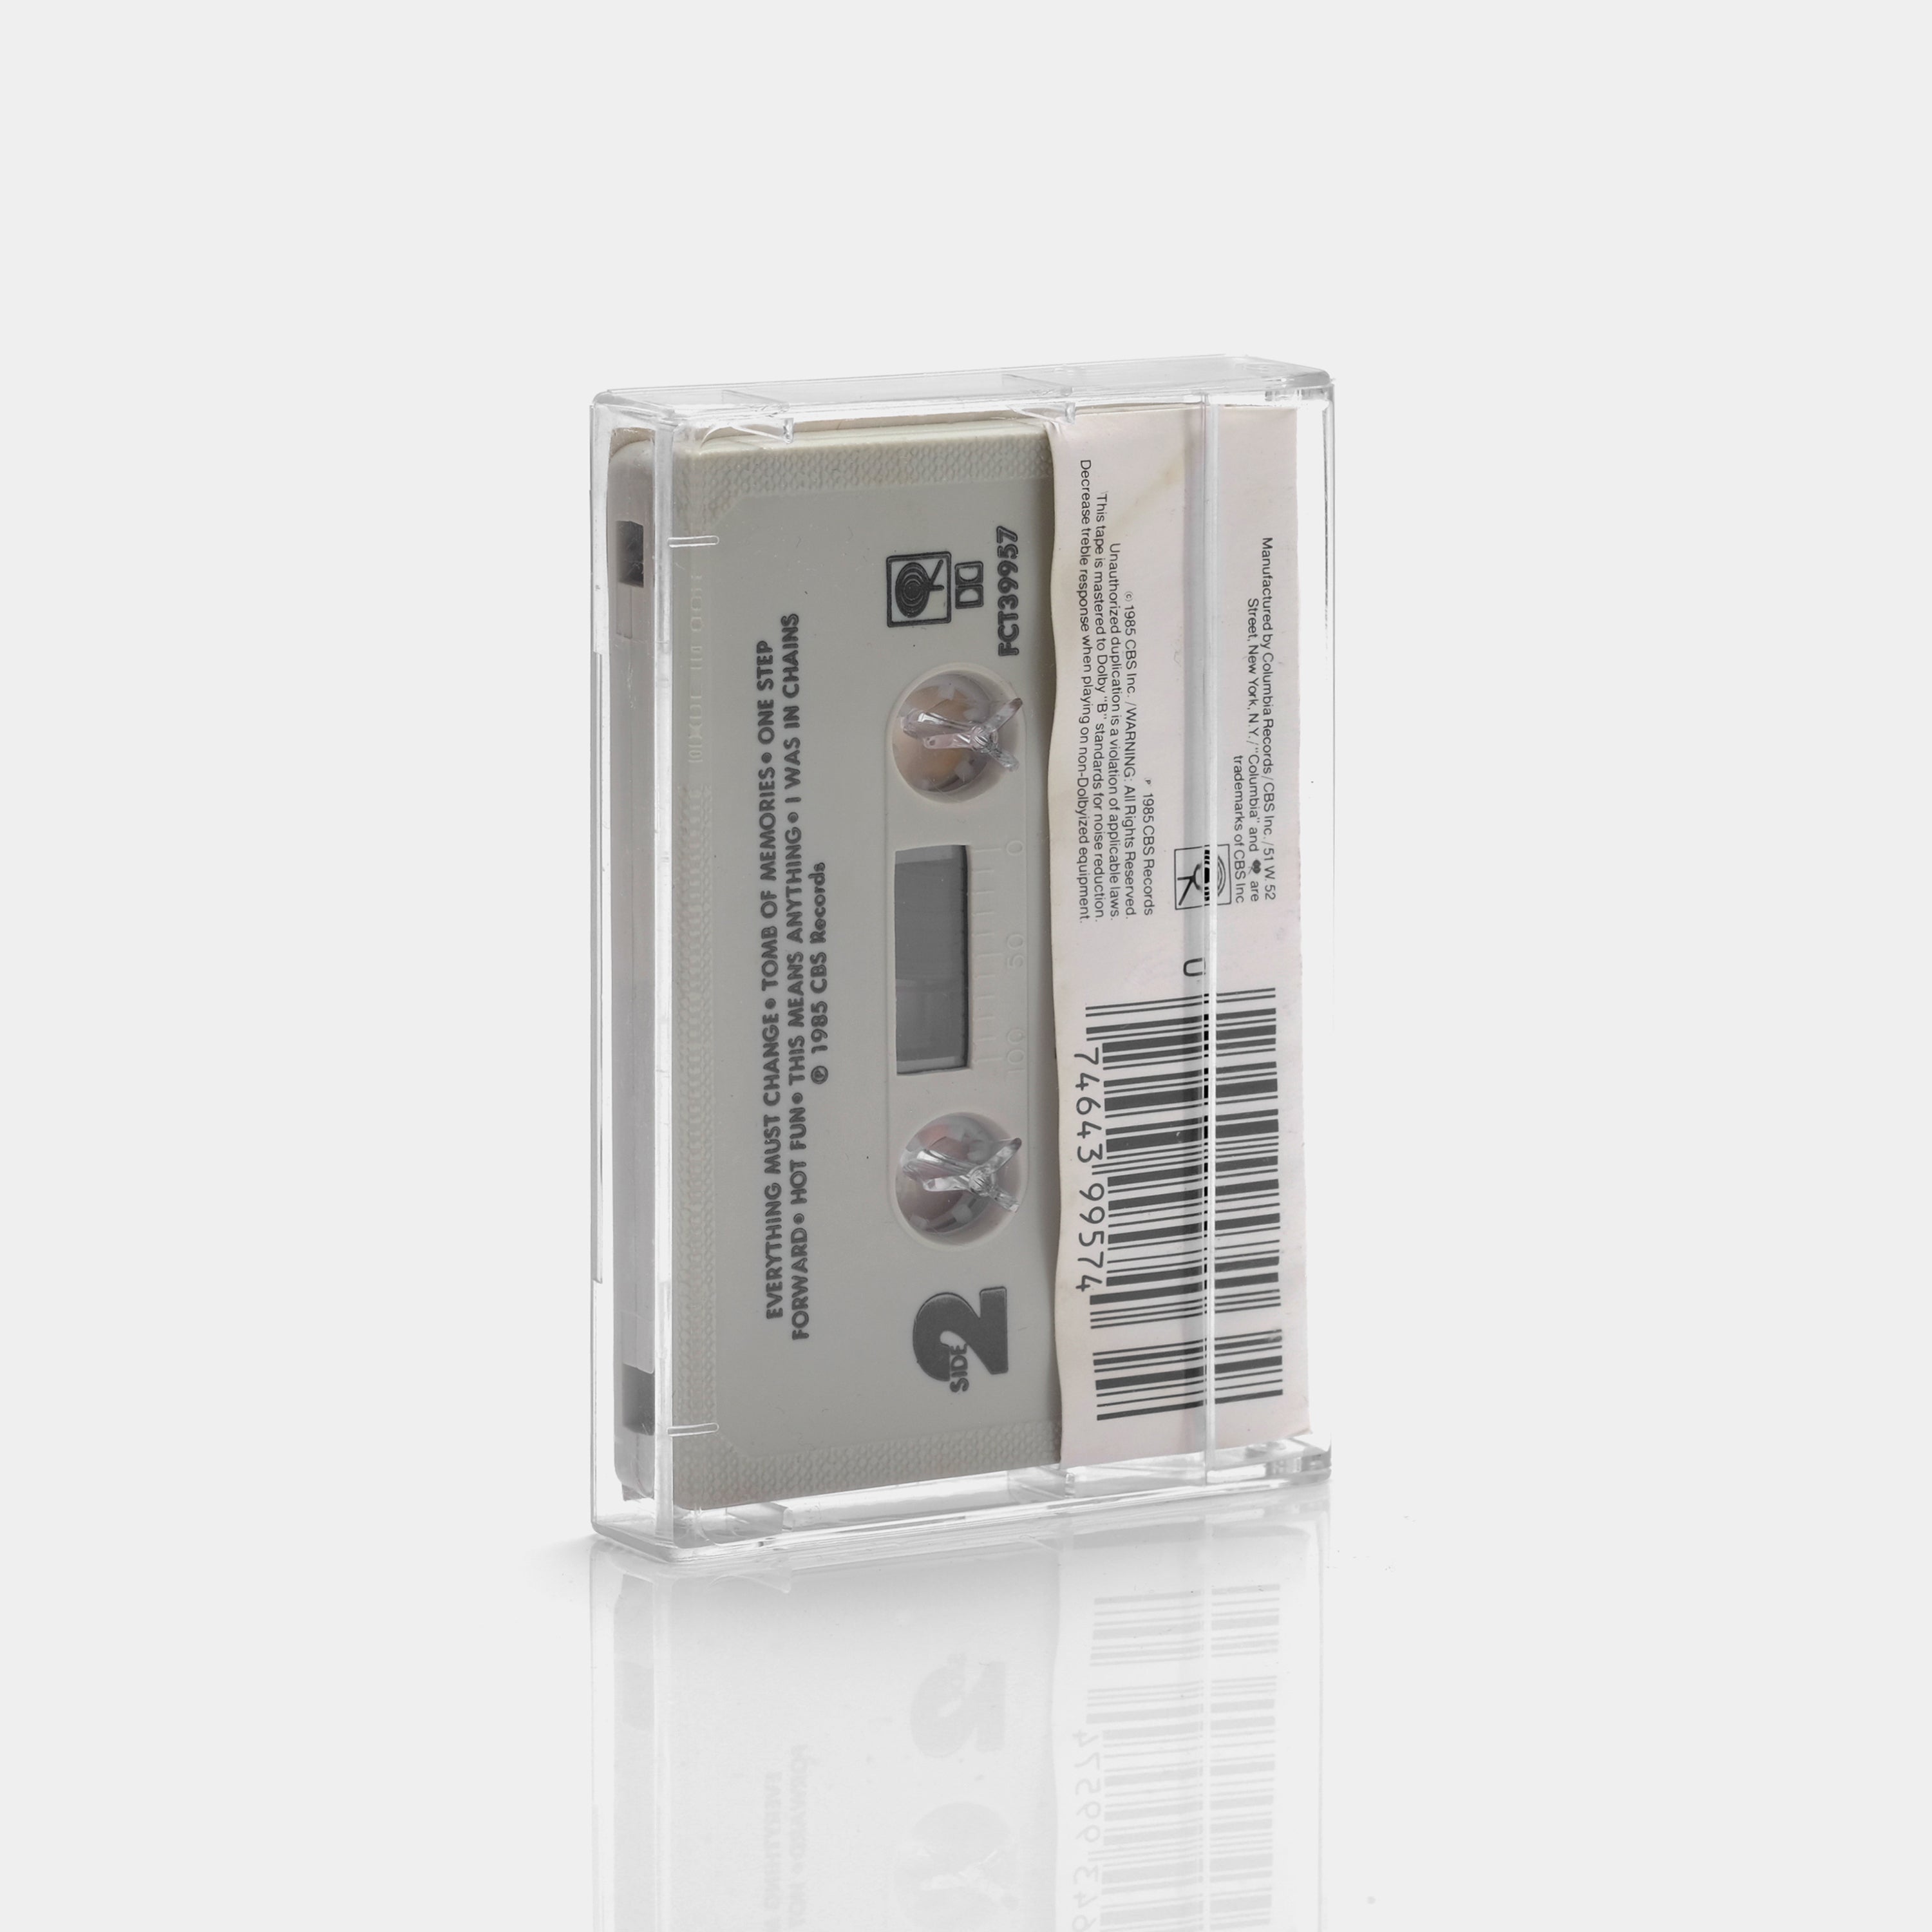 Paul Young - The Secret Of Association Cassette Tape